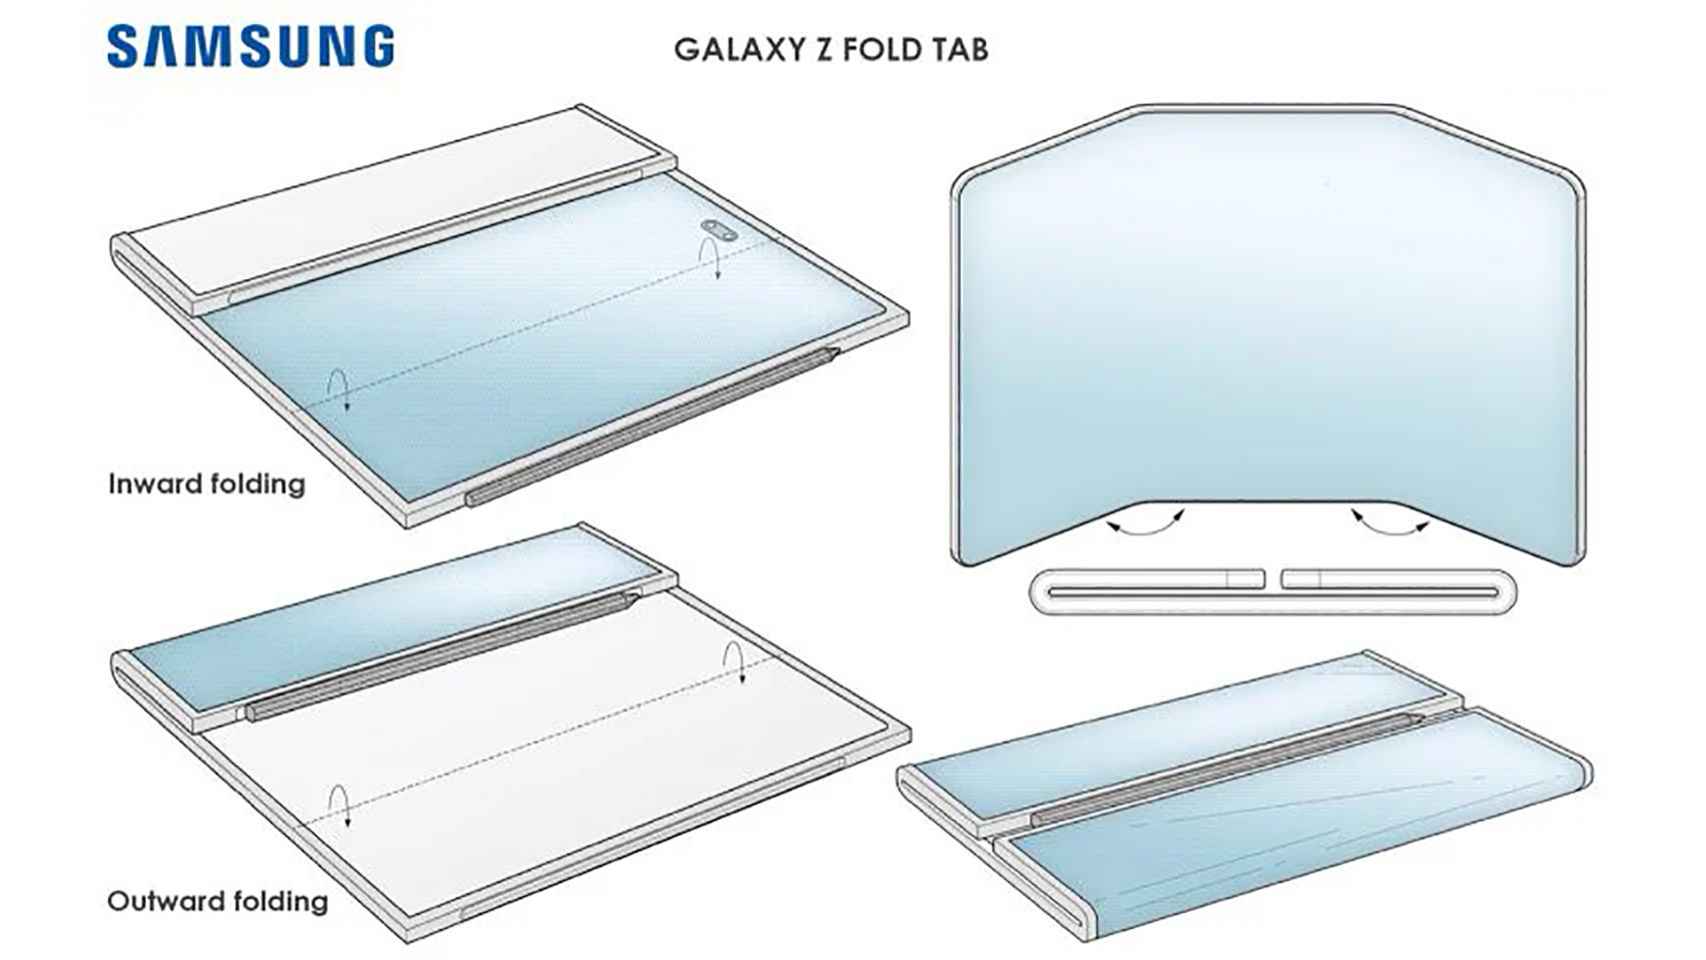 Patente del posible Galaxy Z Fold Tab